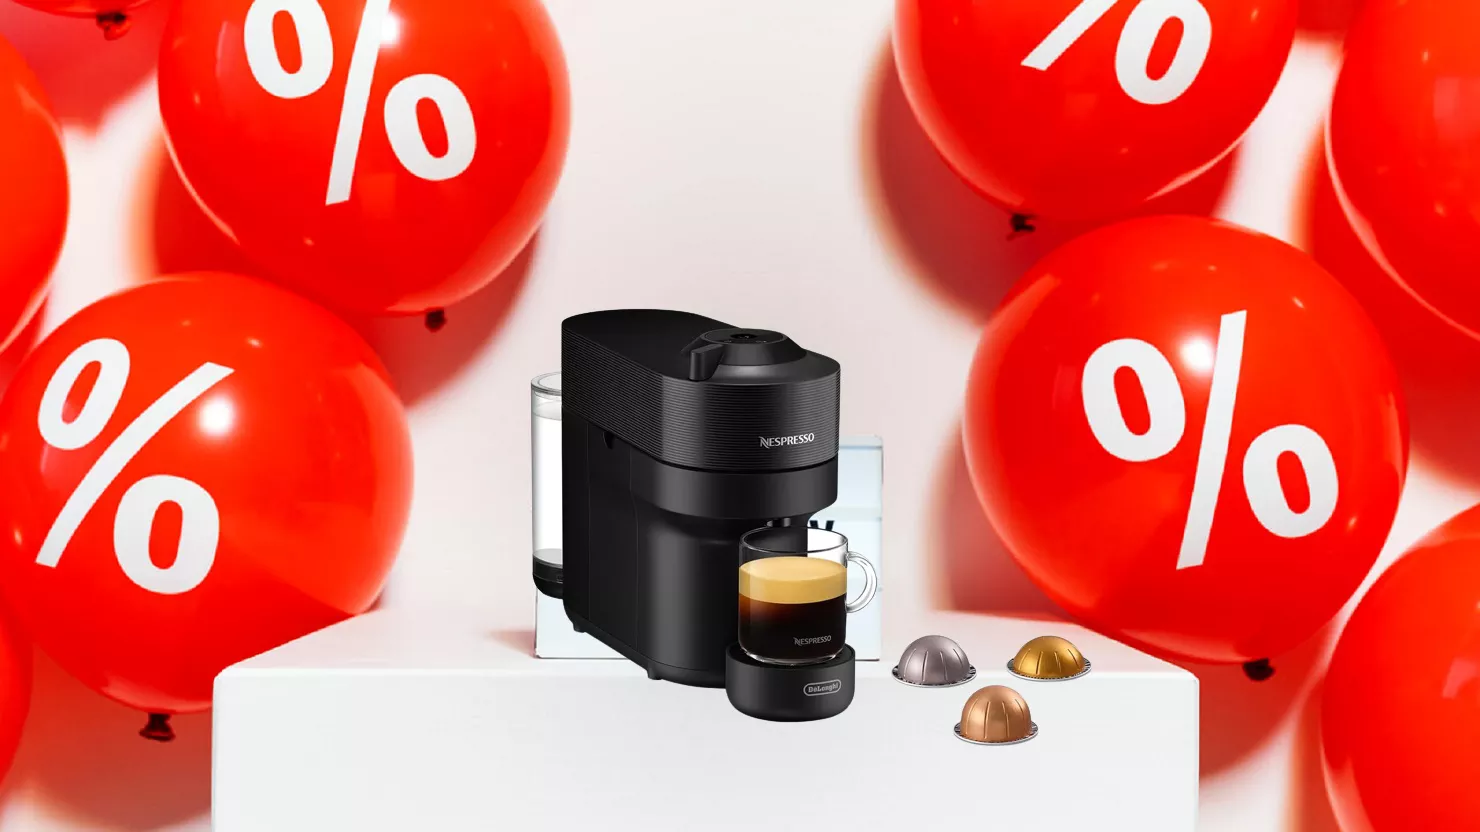 BOMBA BLACK FRIDAY: Macchina per caffè De'Longhi Nespresso a SOLI 59 EURO